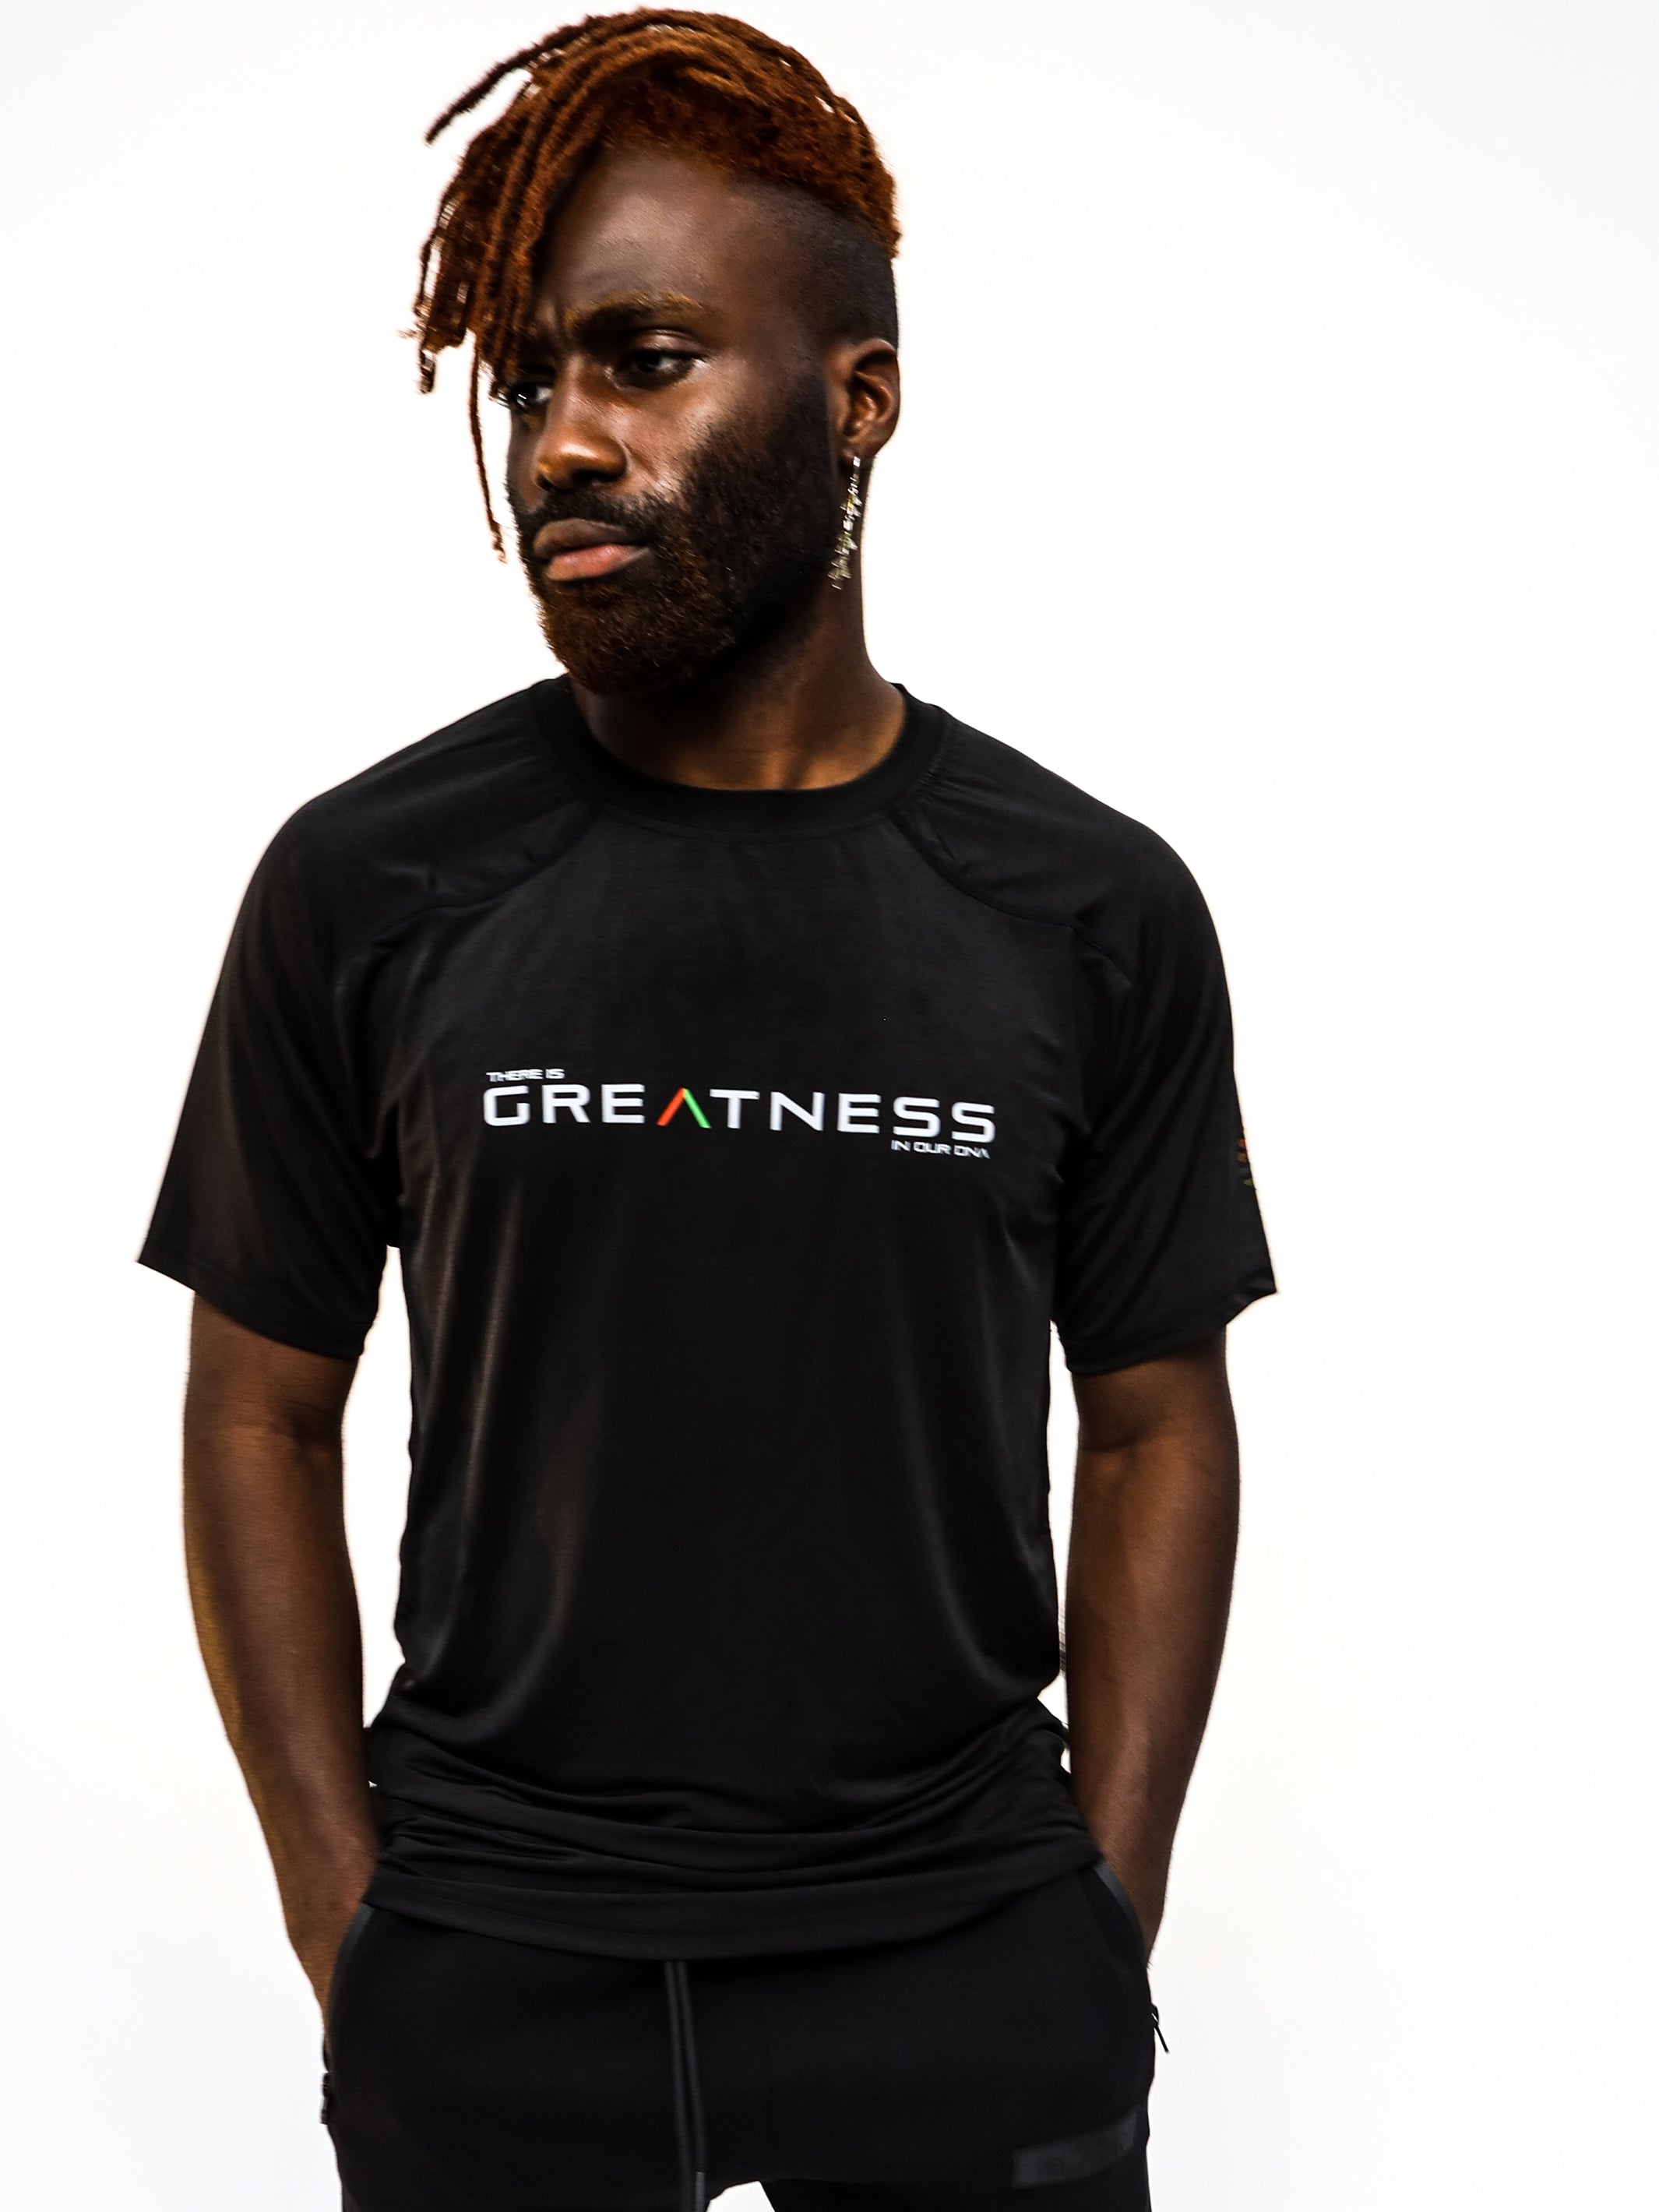 Men's GREATNESS Performance Shirt